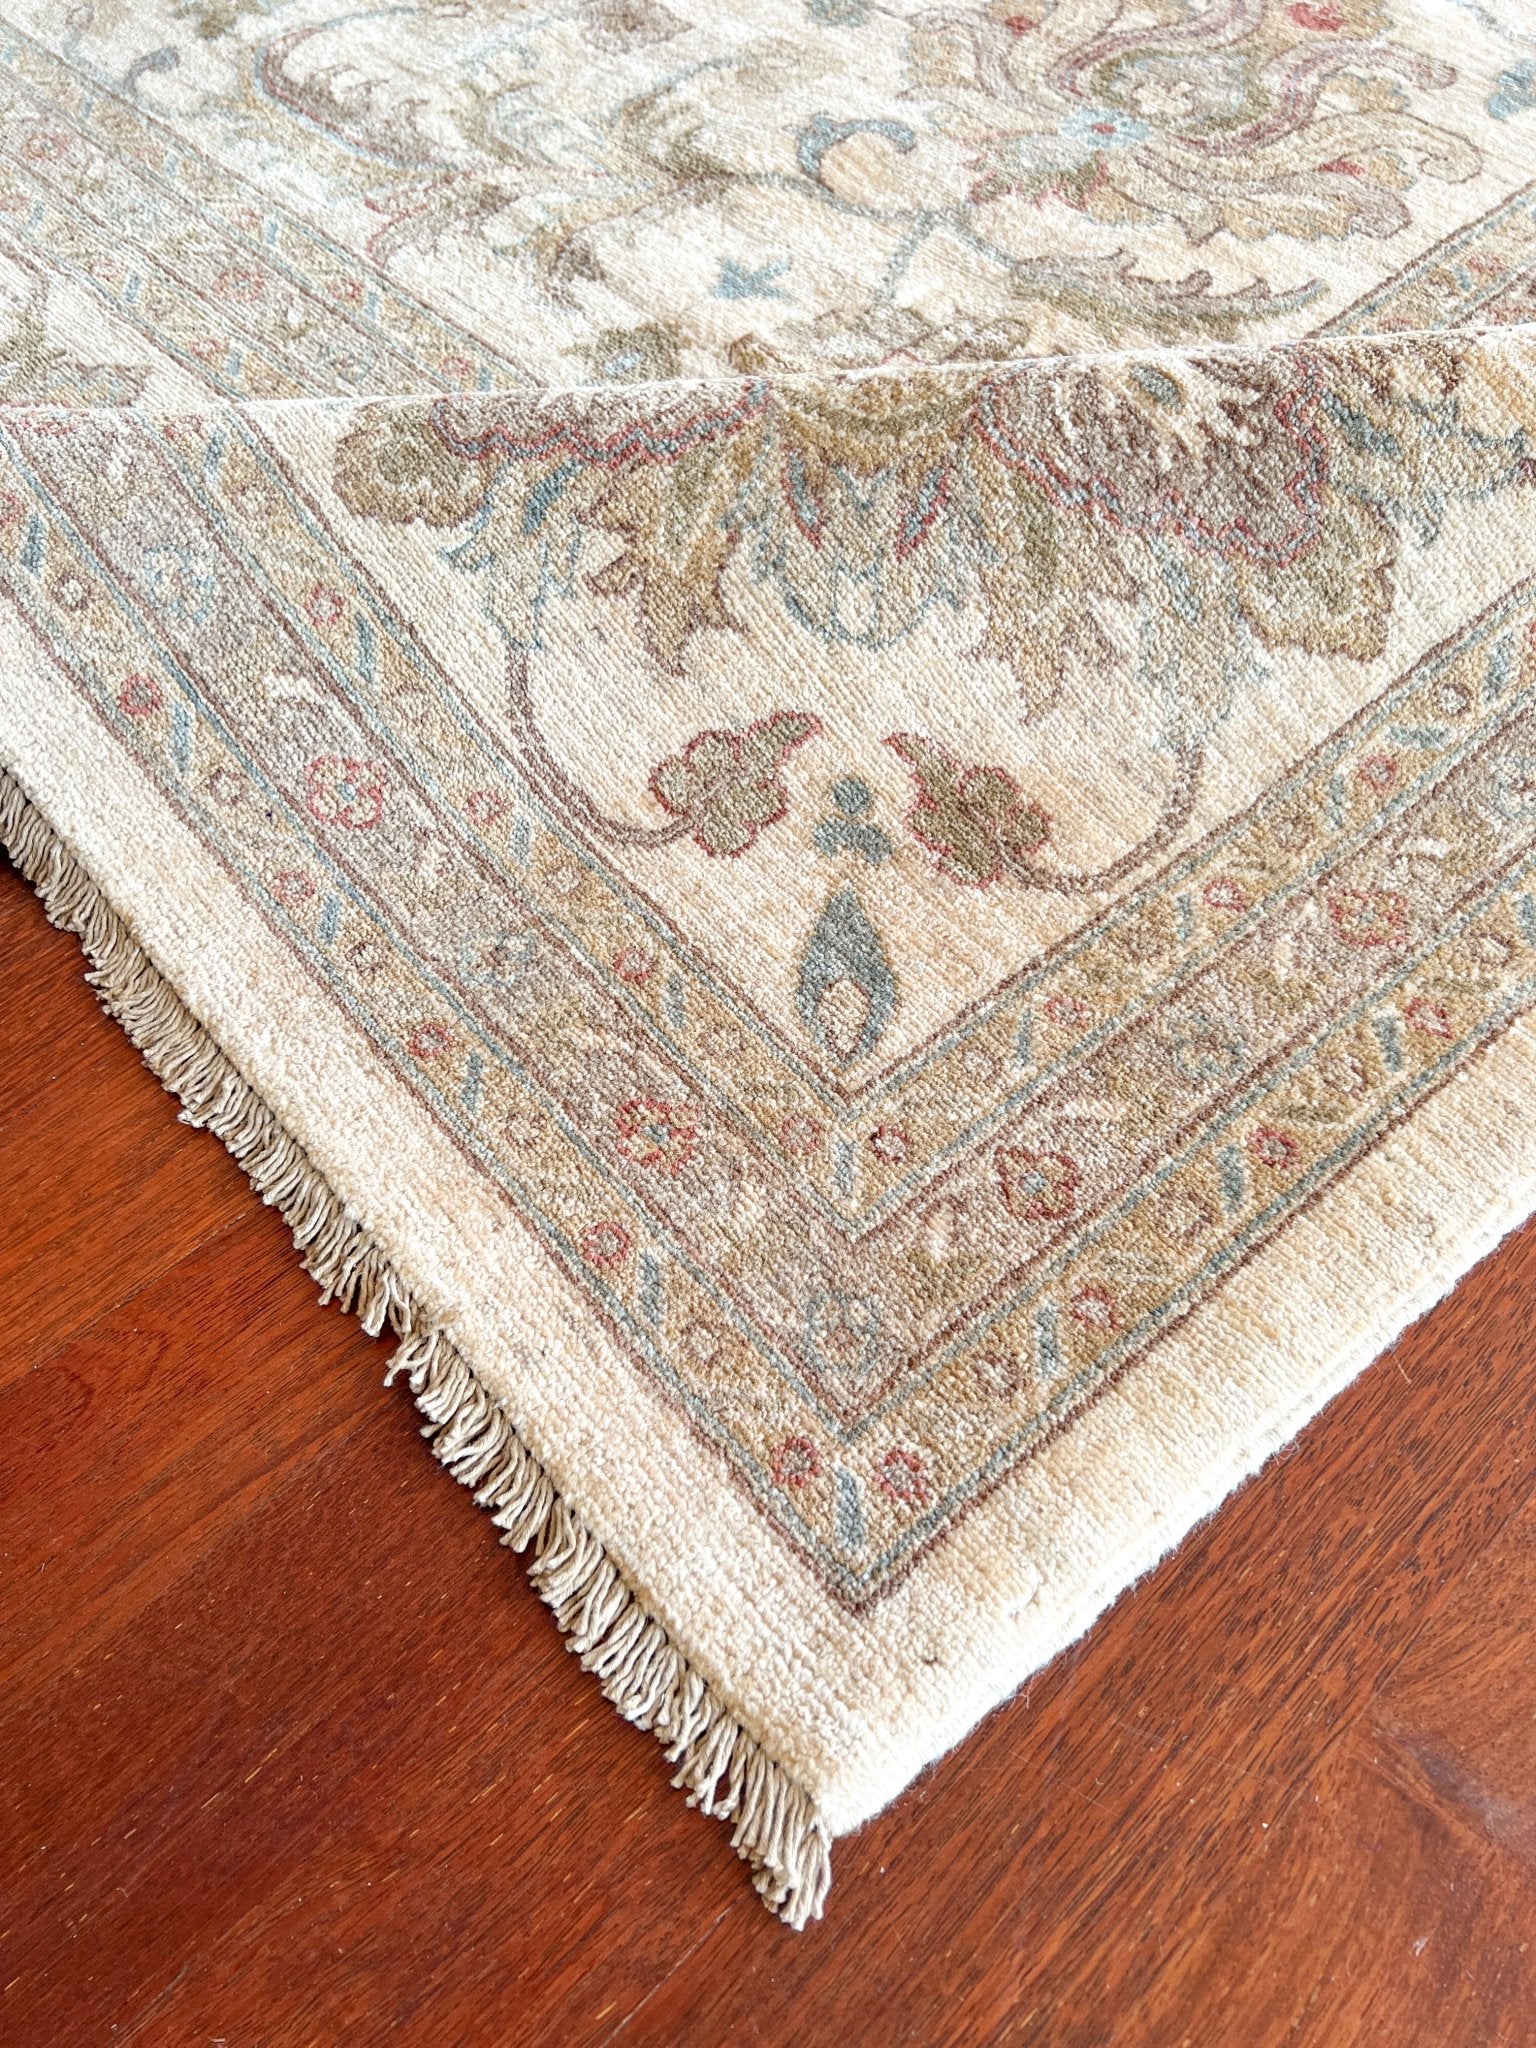 Large handmade wool oushak turkish rug. Oriental rug shop palo alto rug shop san francisco bay area berkeley buy rug online